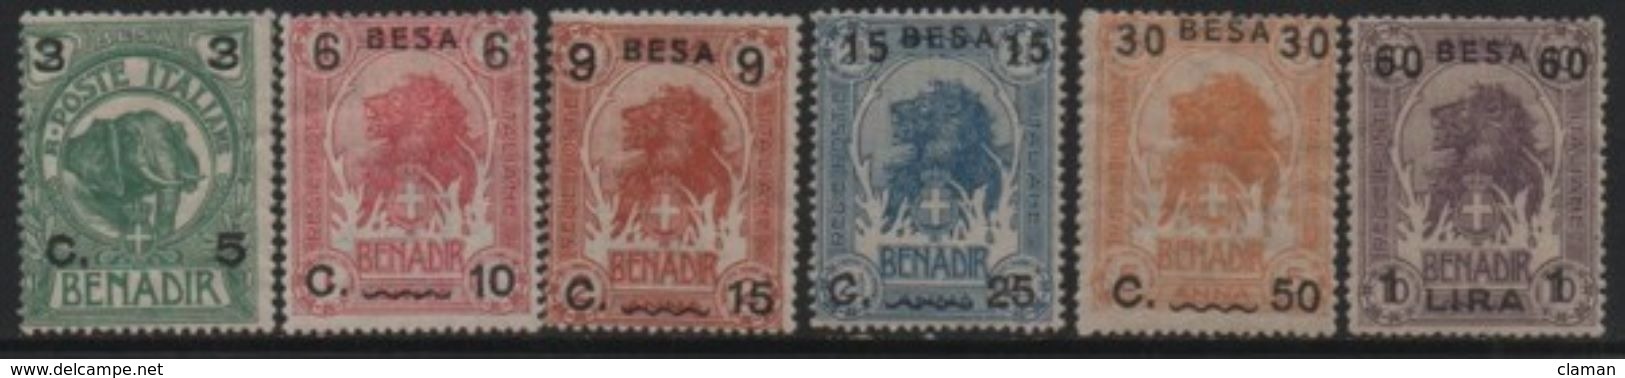 Somalia (Italian-Italienne) 1922 Elephant-Lion Head/Tête De Eléphant-Lion / Overprinted/Surchargés BESA/LIRA * - Somalia